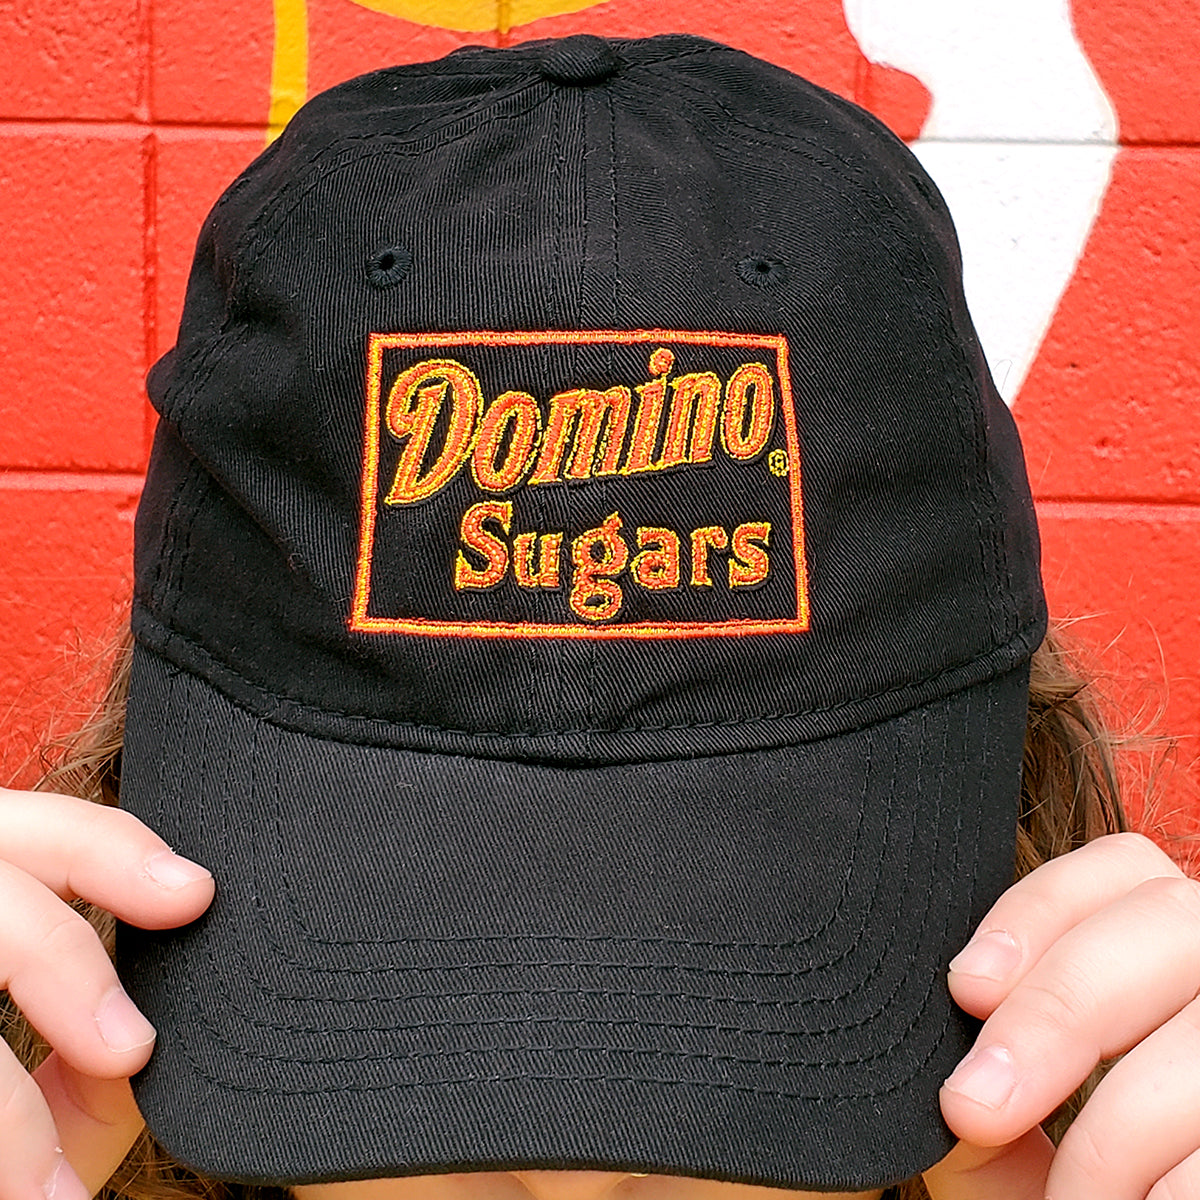 Domino Sugar®  Sign (Black) / Baseball Hat - Route One Apparel